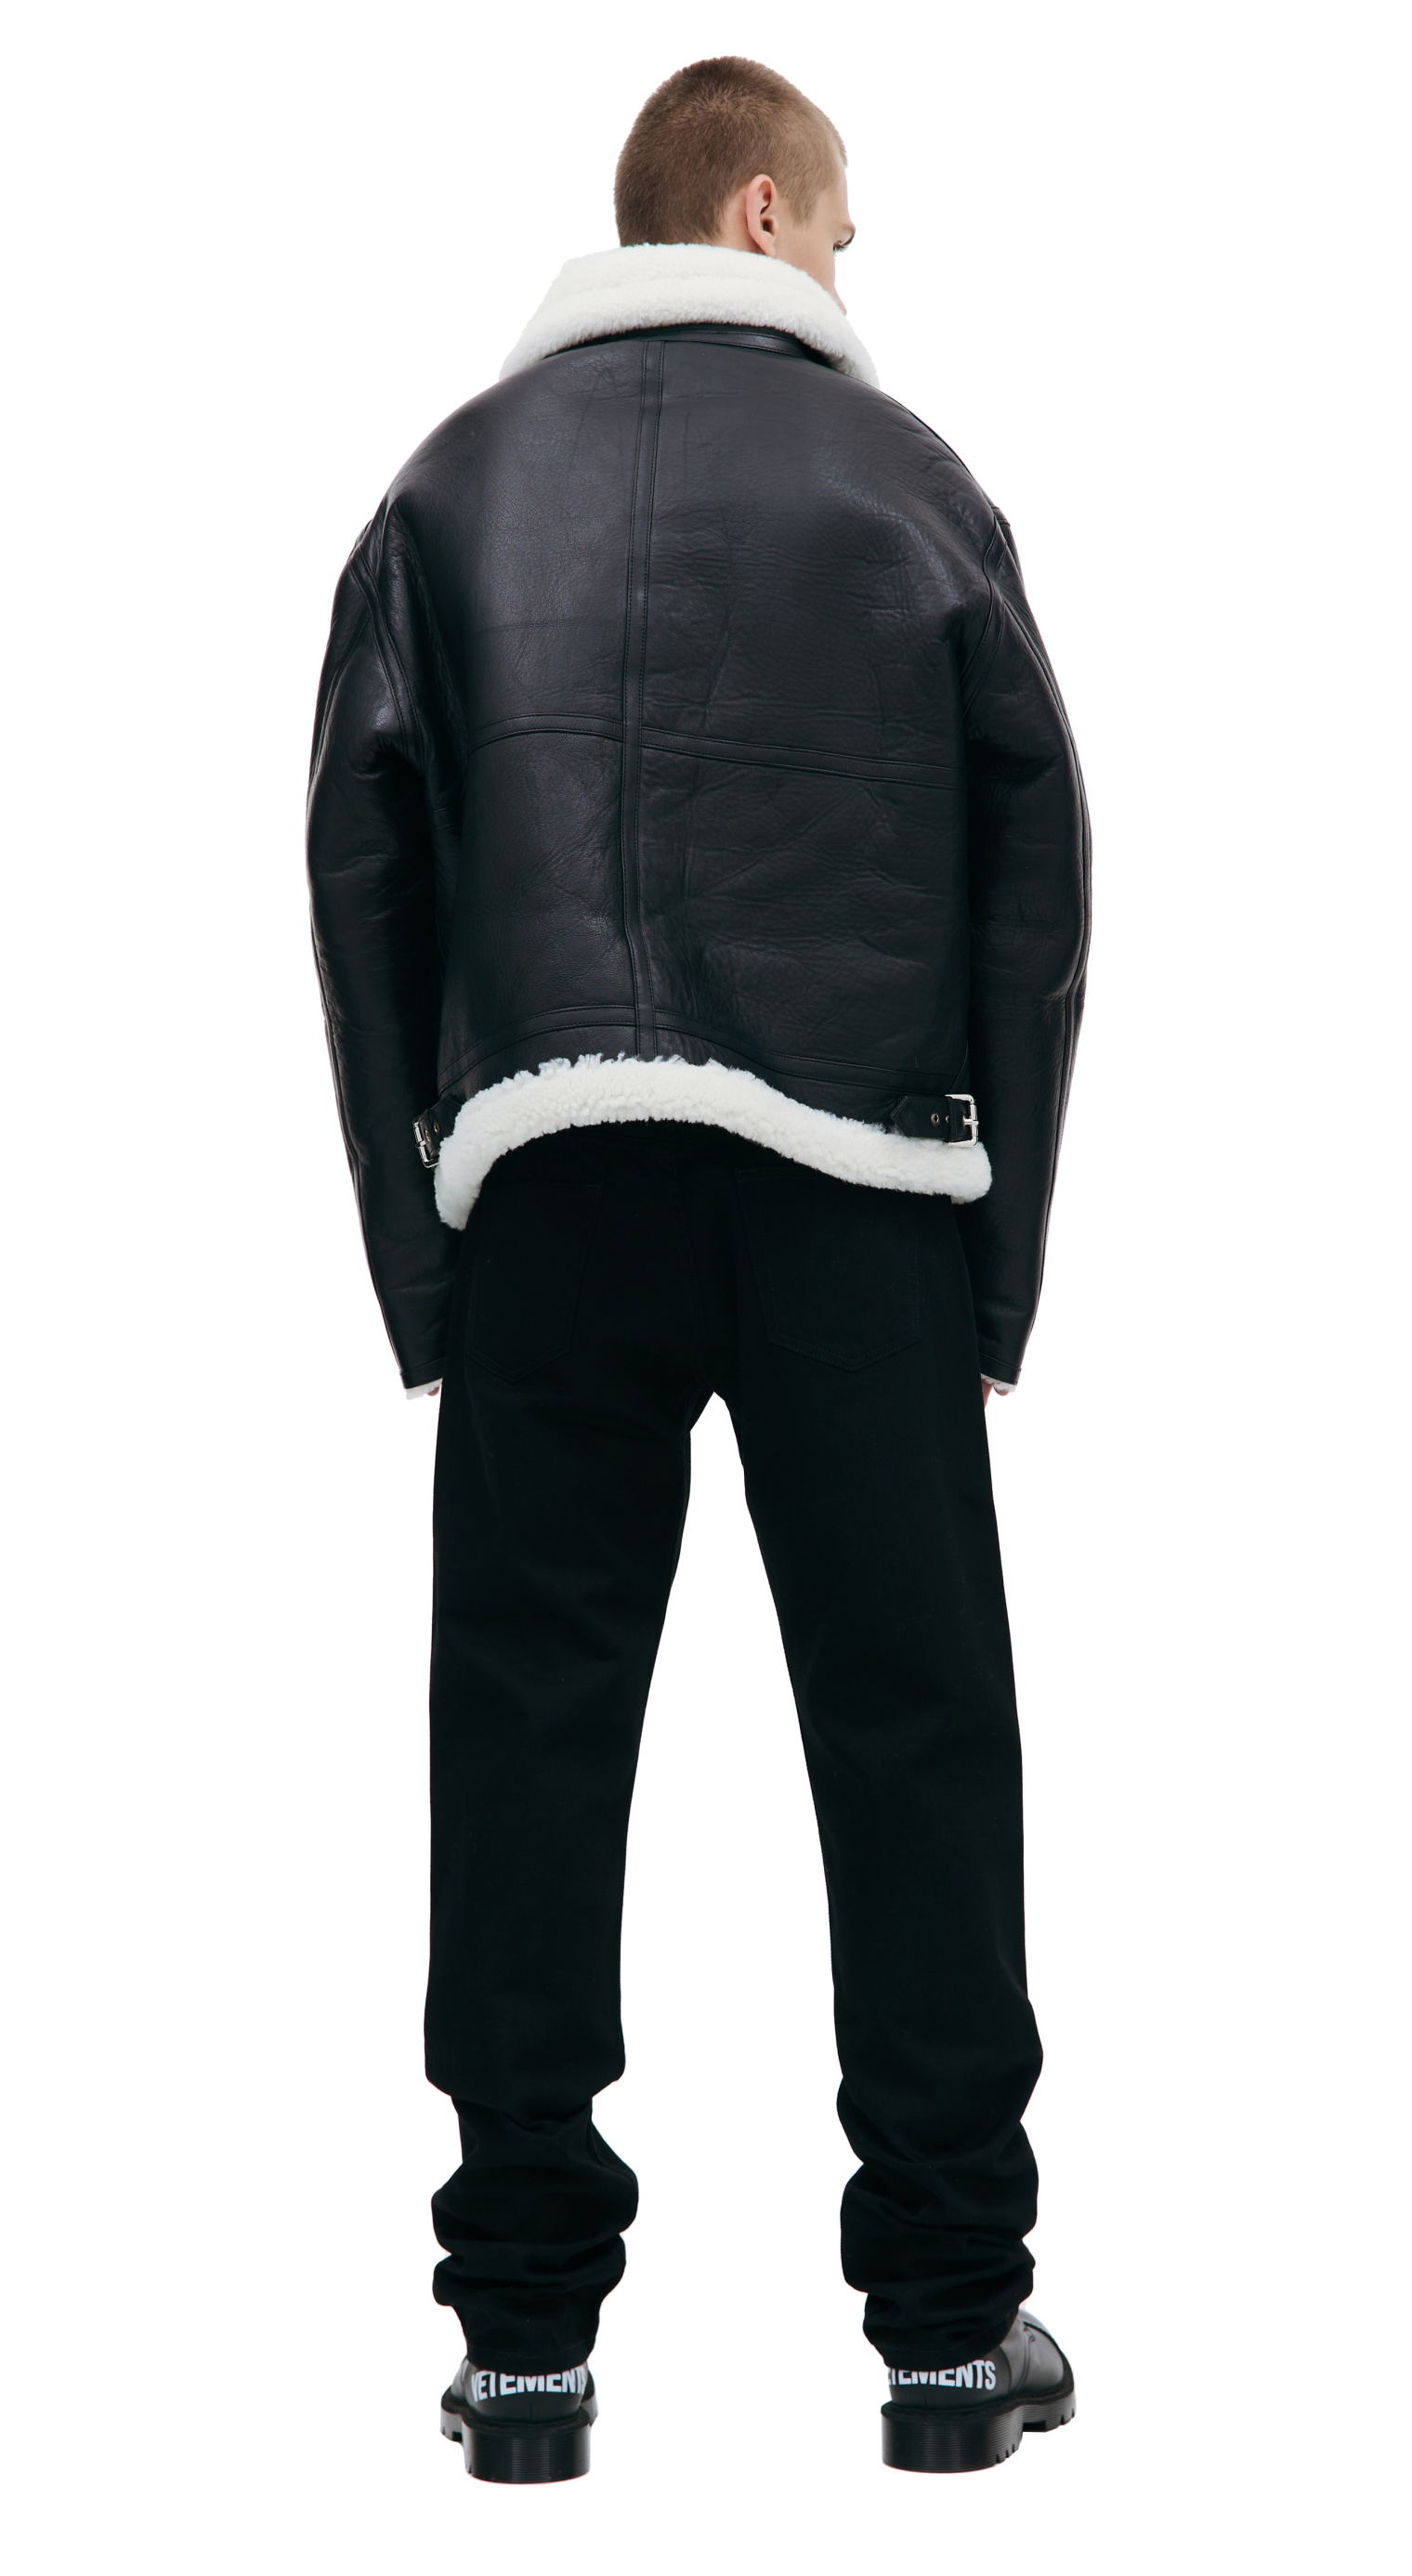 VTMNTS Black buckle shearling jacket